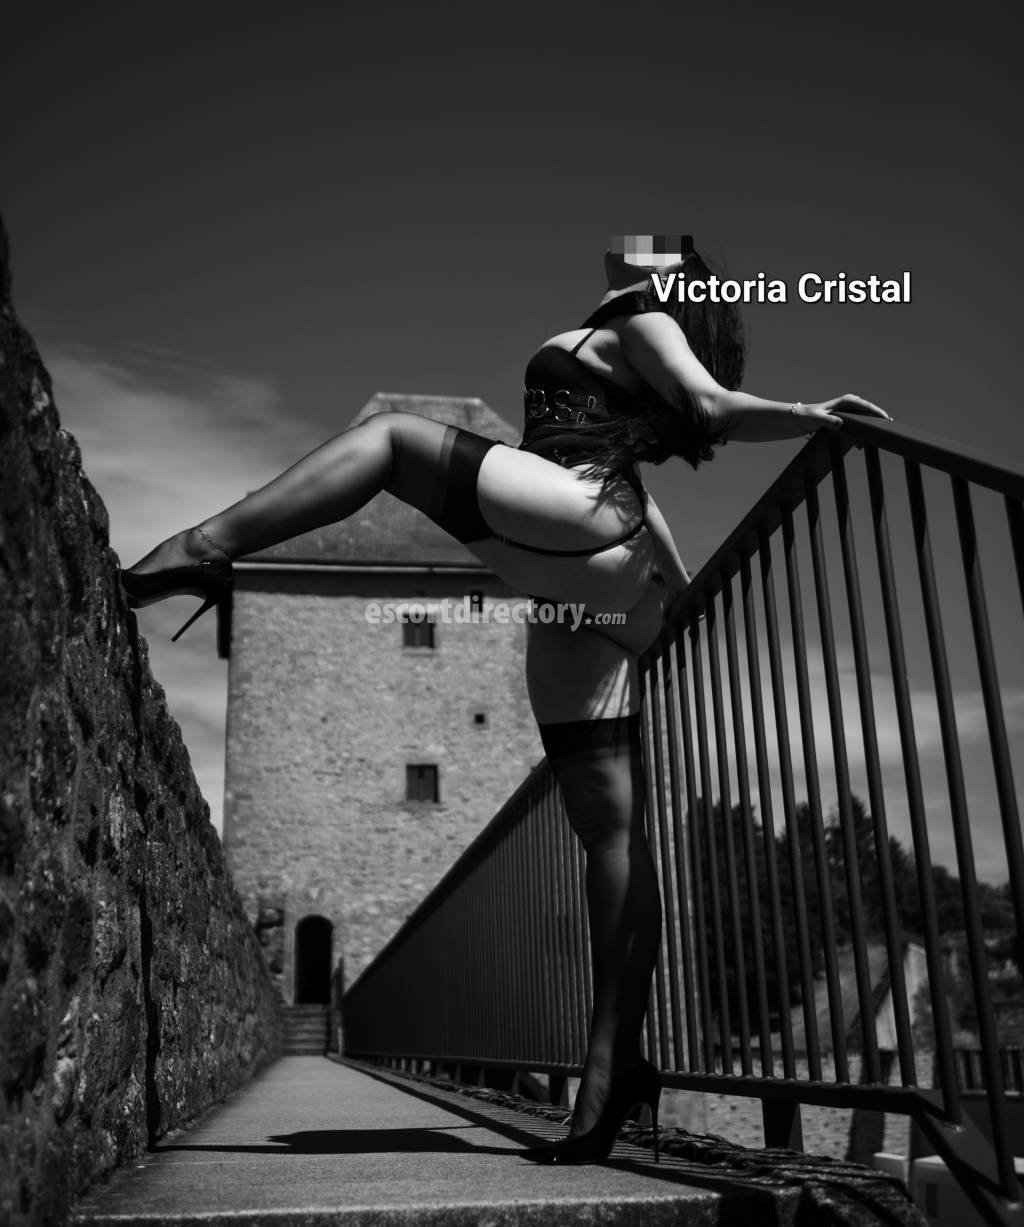 Victoria-Cristal Completamente Natural escort in Tel Aviv offers Cinta services